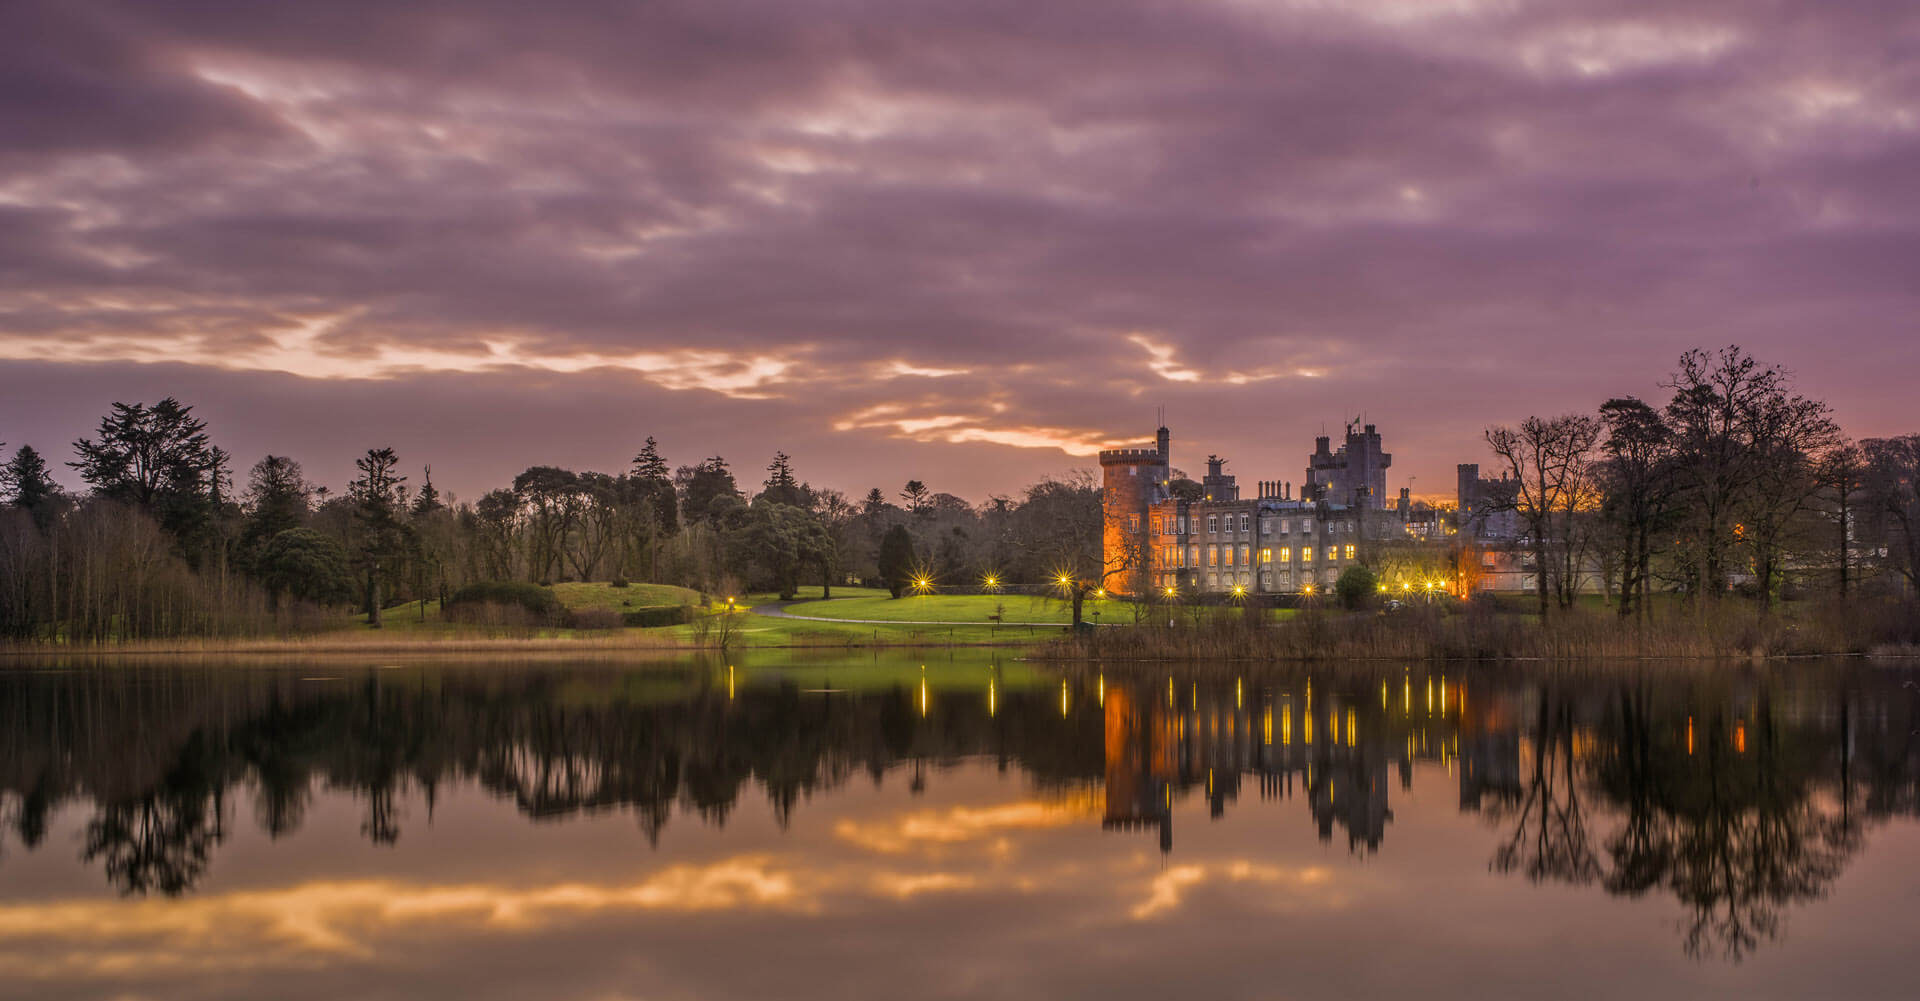 Dromoland Castle in Ireland